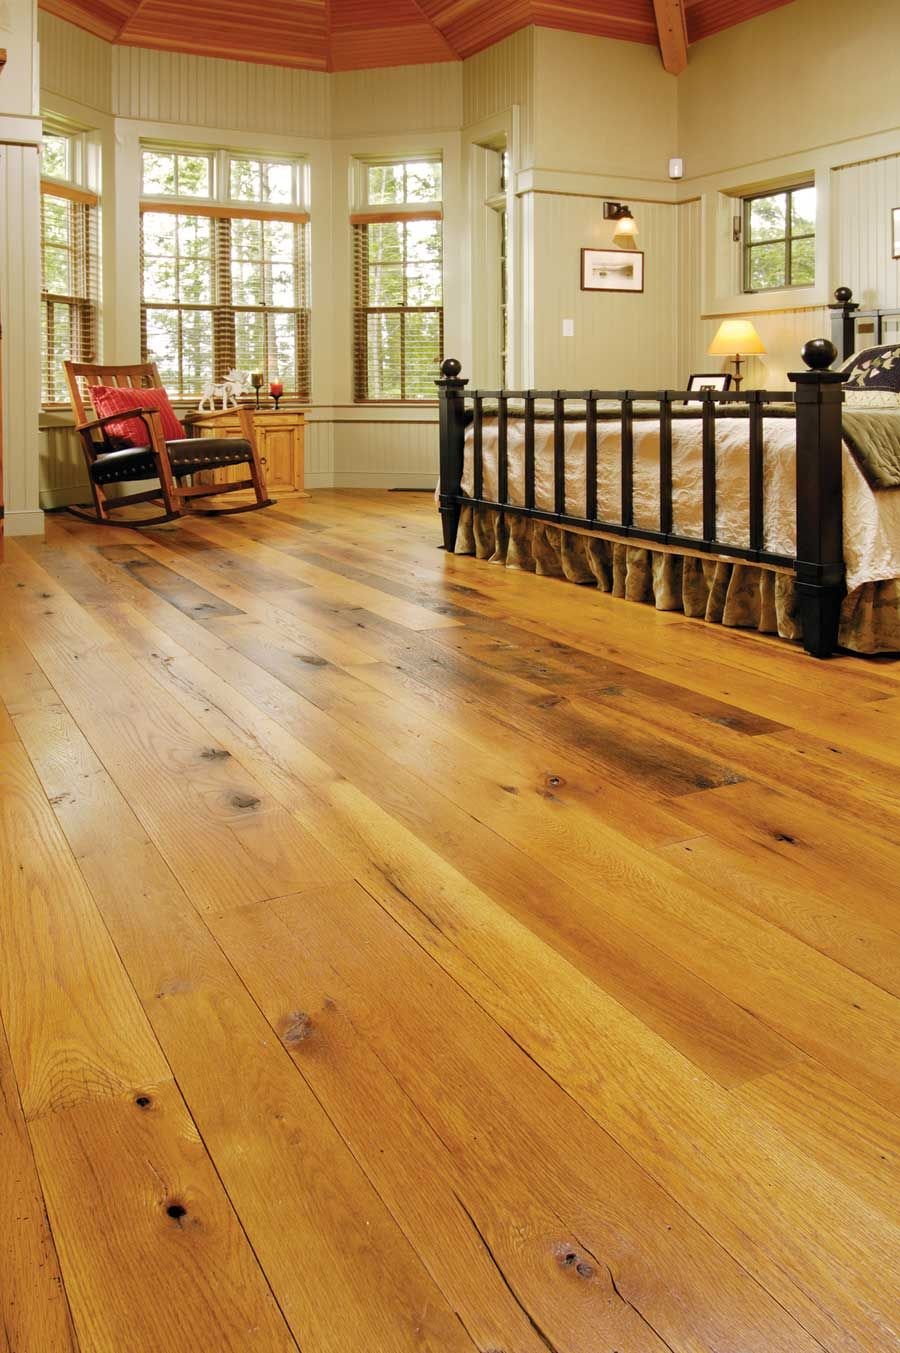 Wooden plank flooring